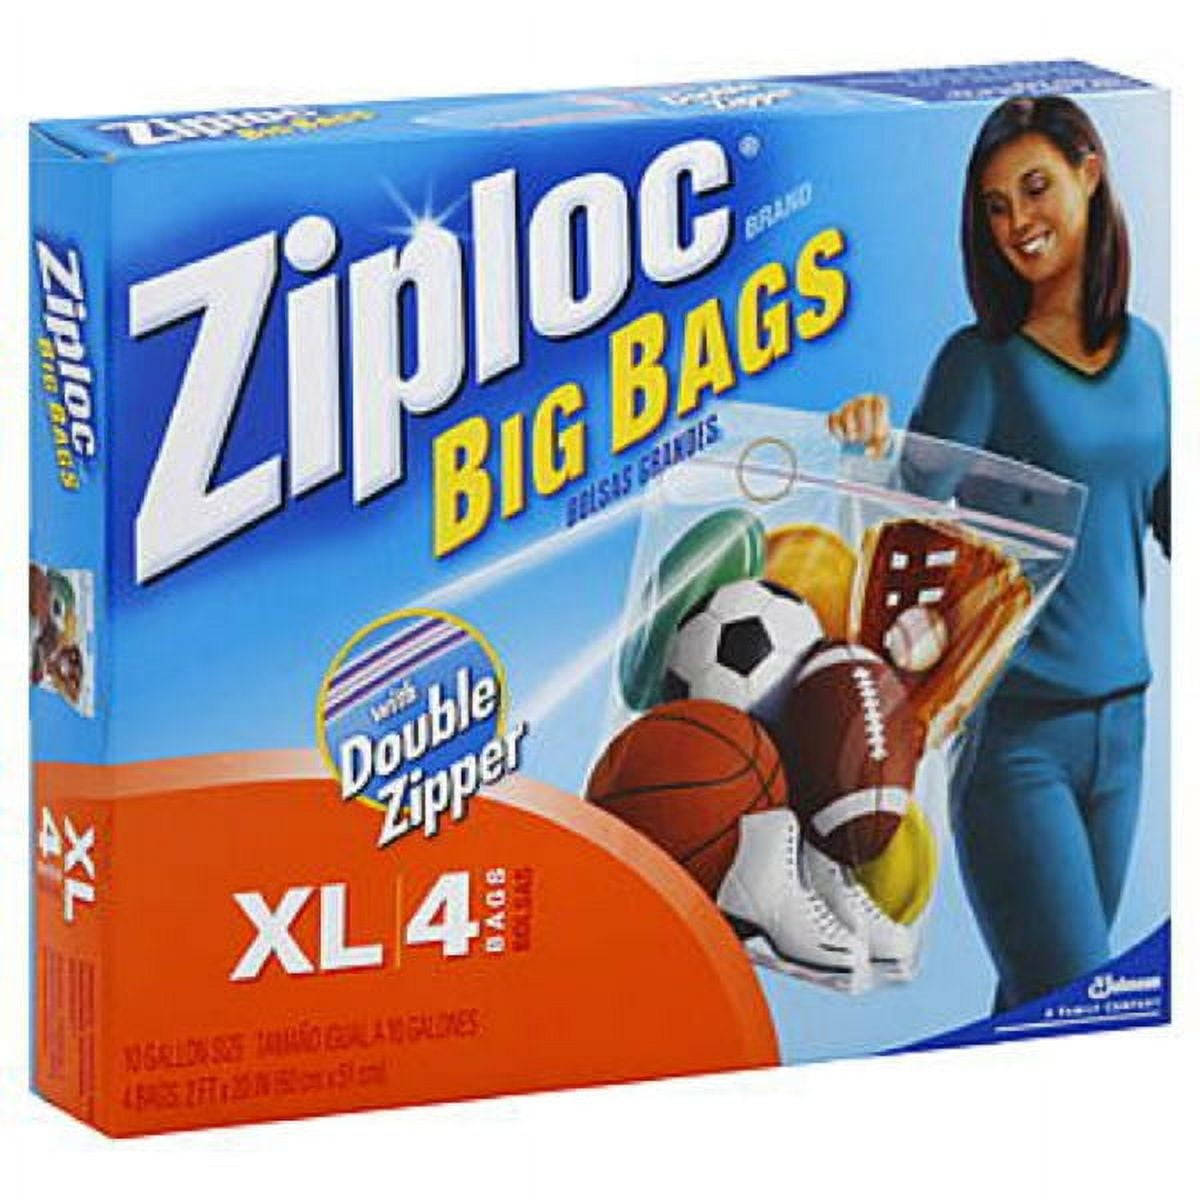 Ziploc Big Bag Double Zipper, X-Large, 4-Count (Pack of 2)